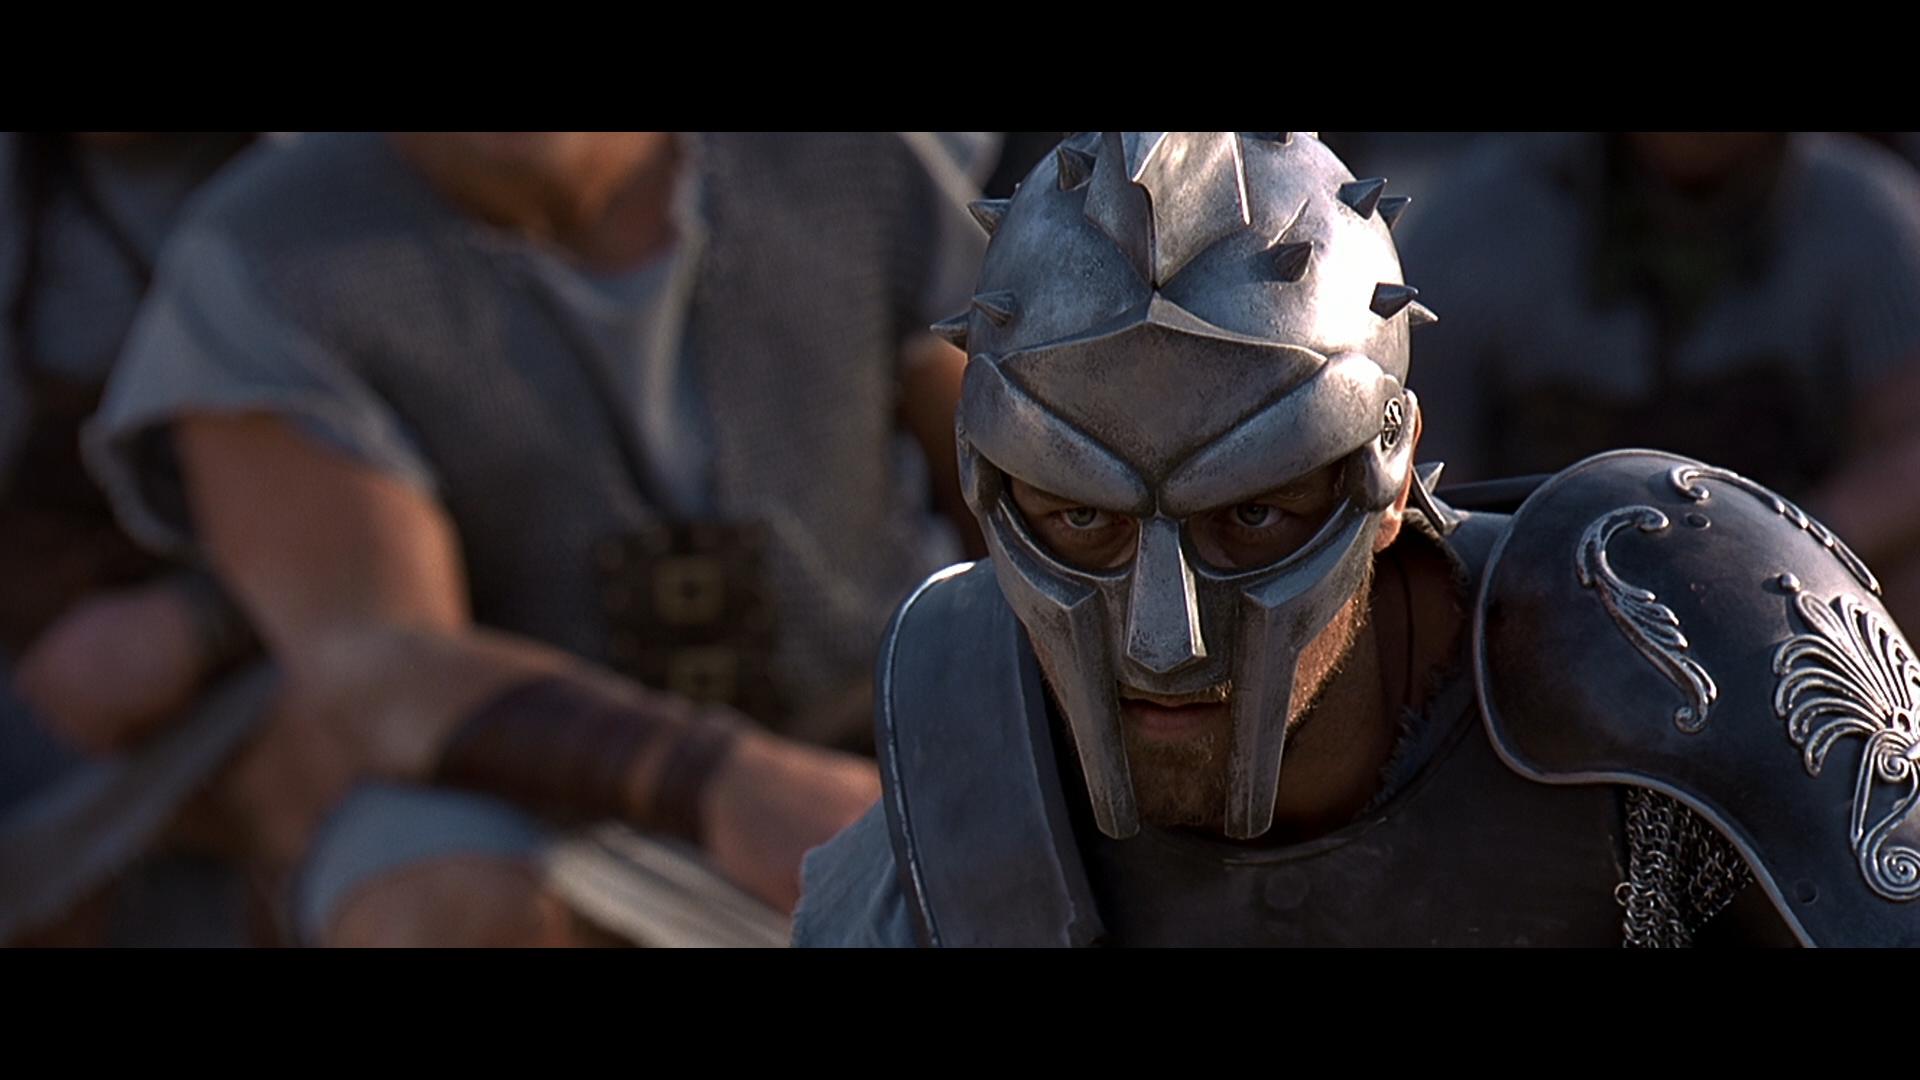 GLADIATOR Action Adventure Drama History warrior armor mask g ...